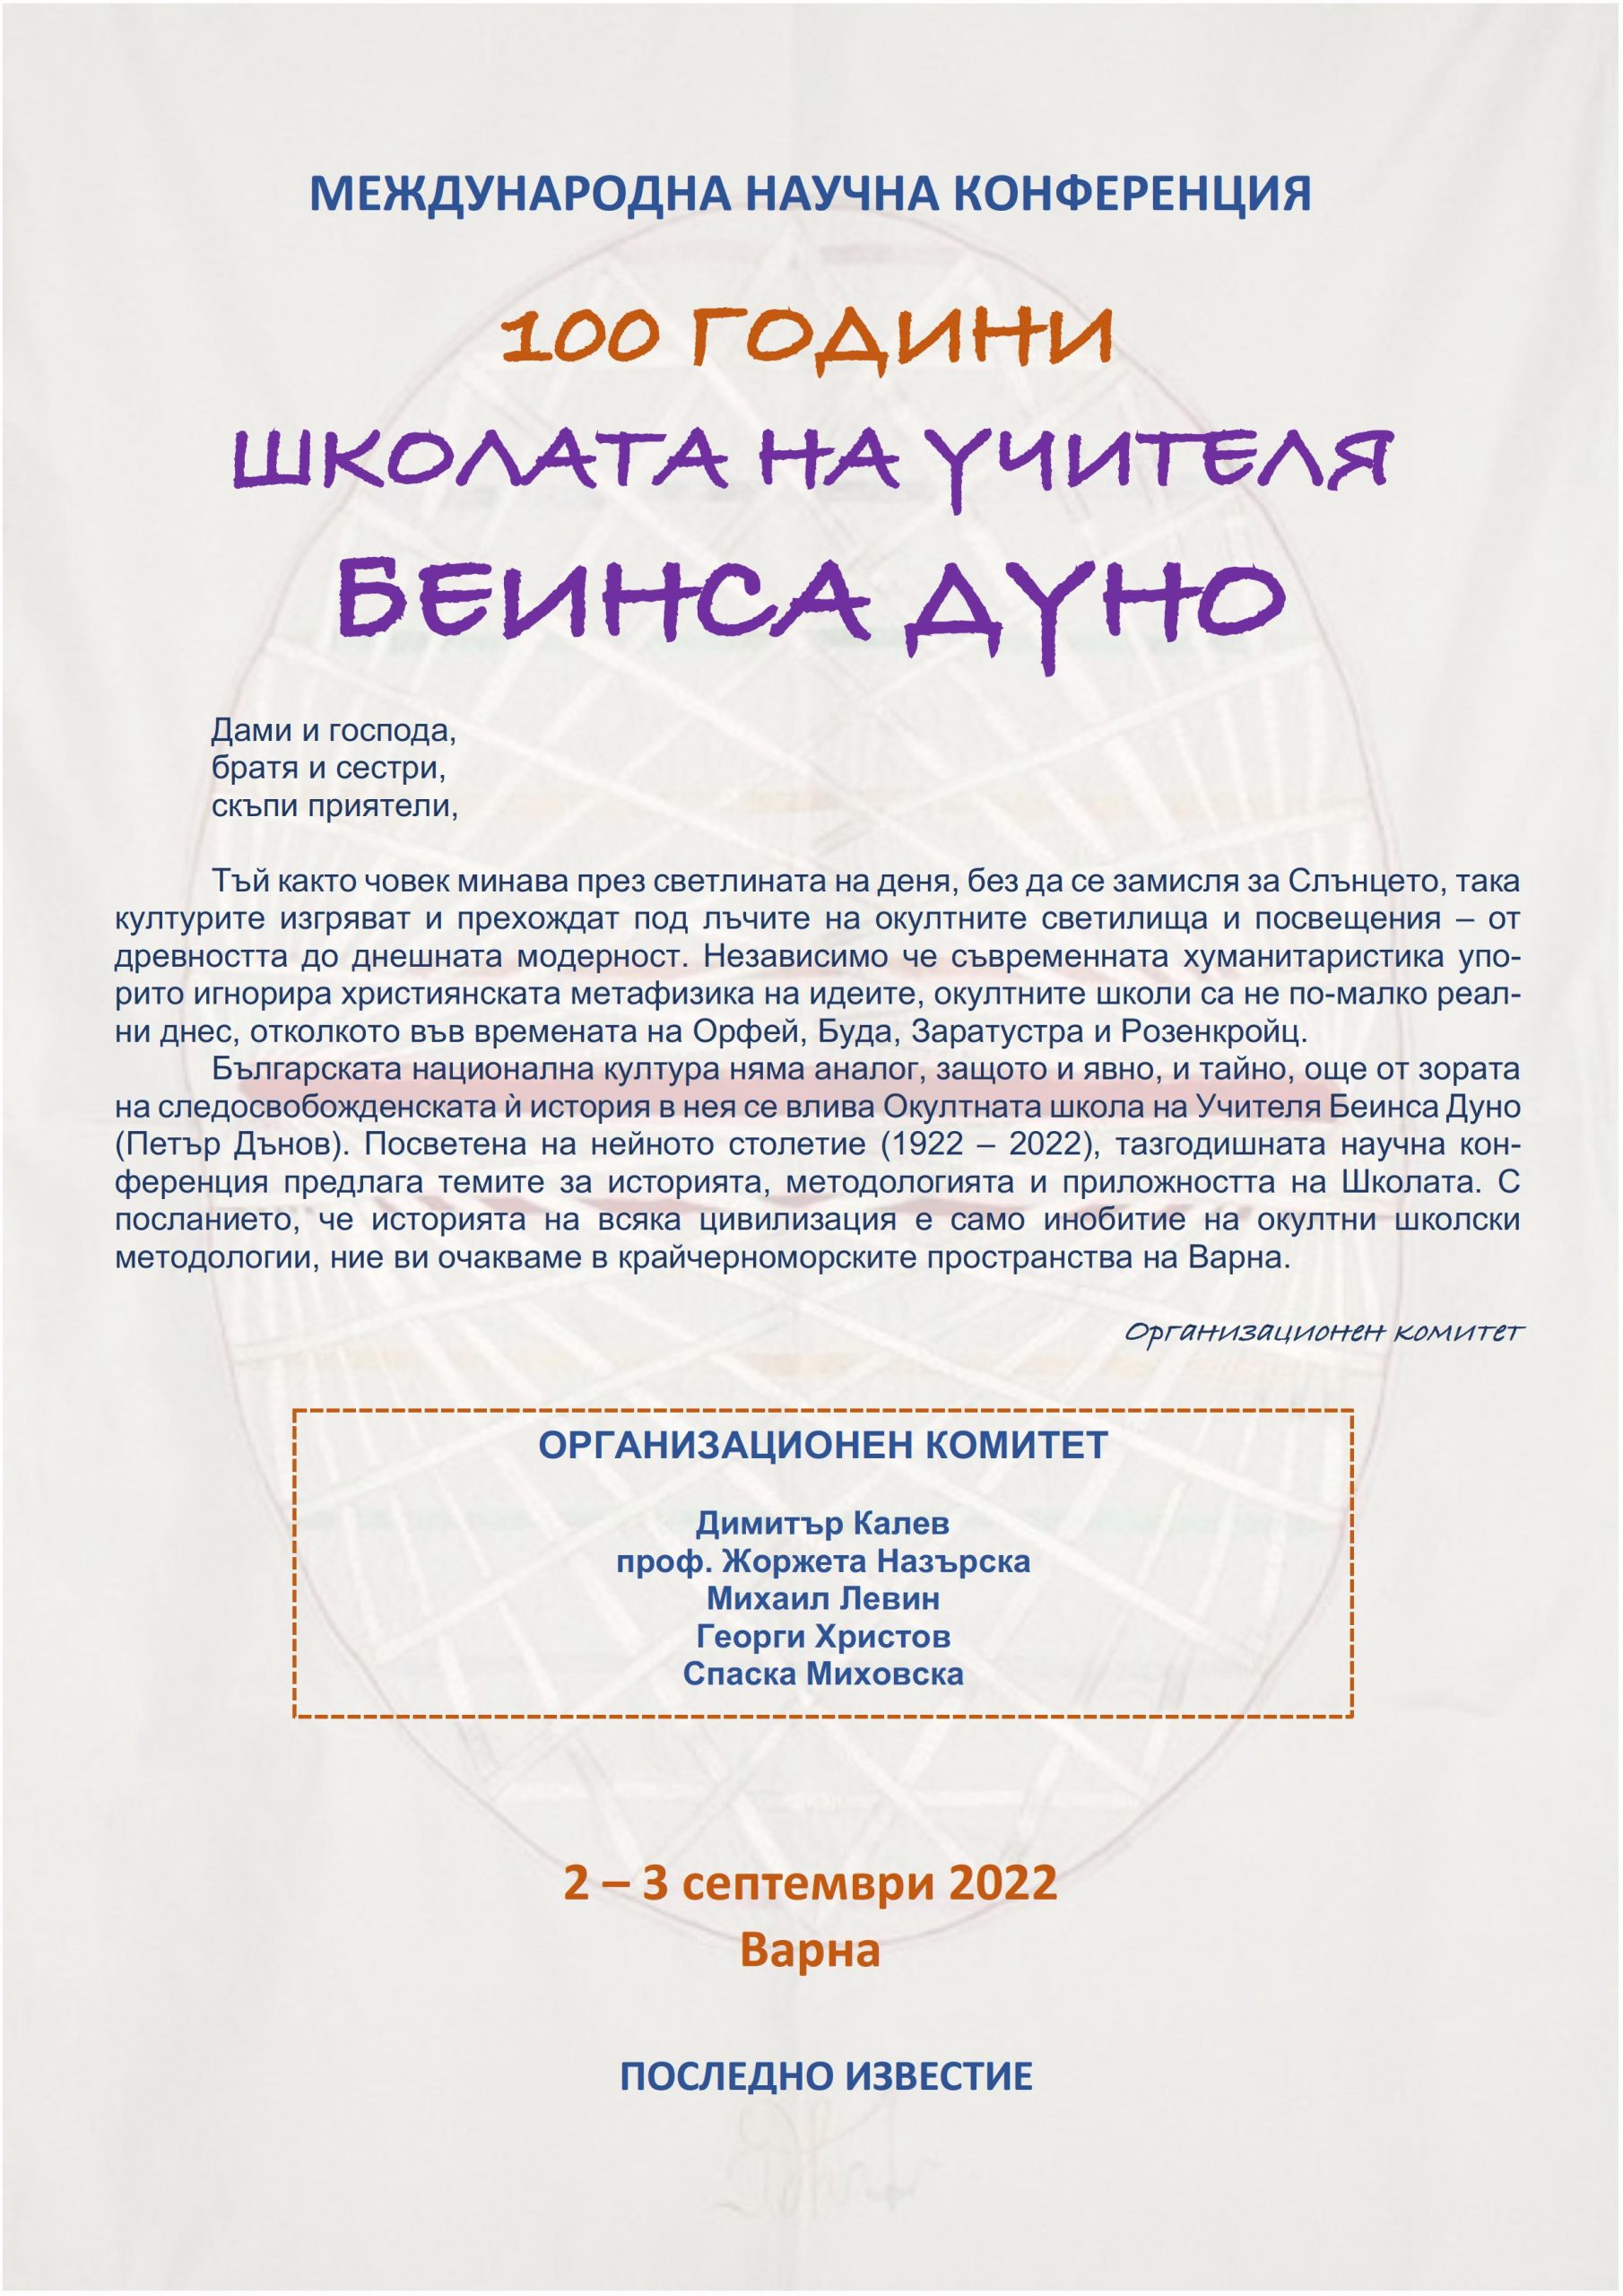 Conference-100Ys-Shkolata-Final-Call-BG-1